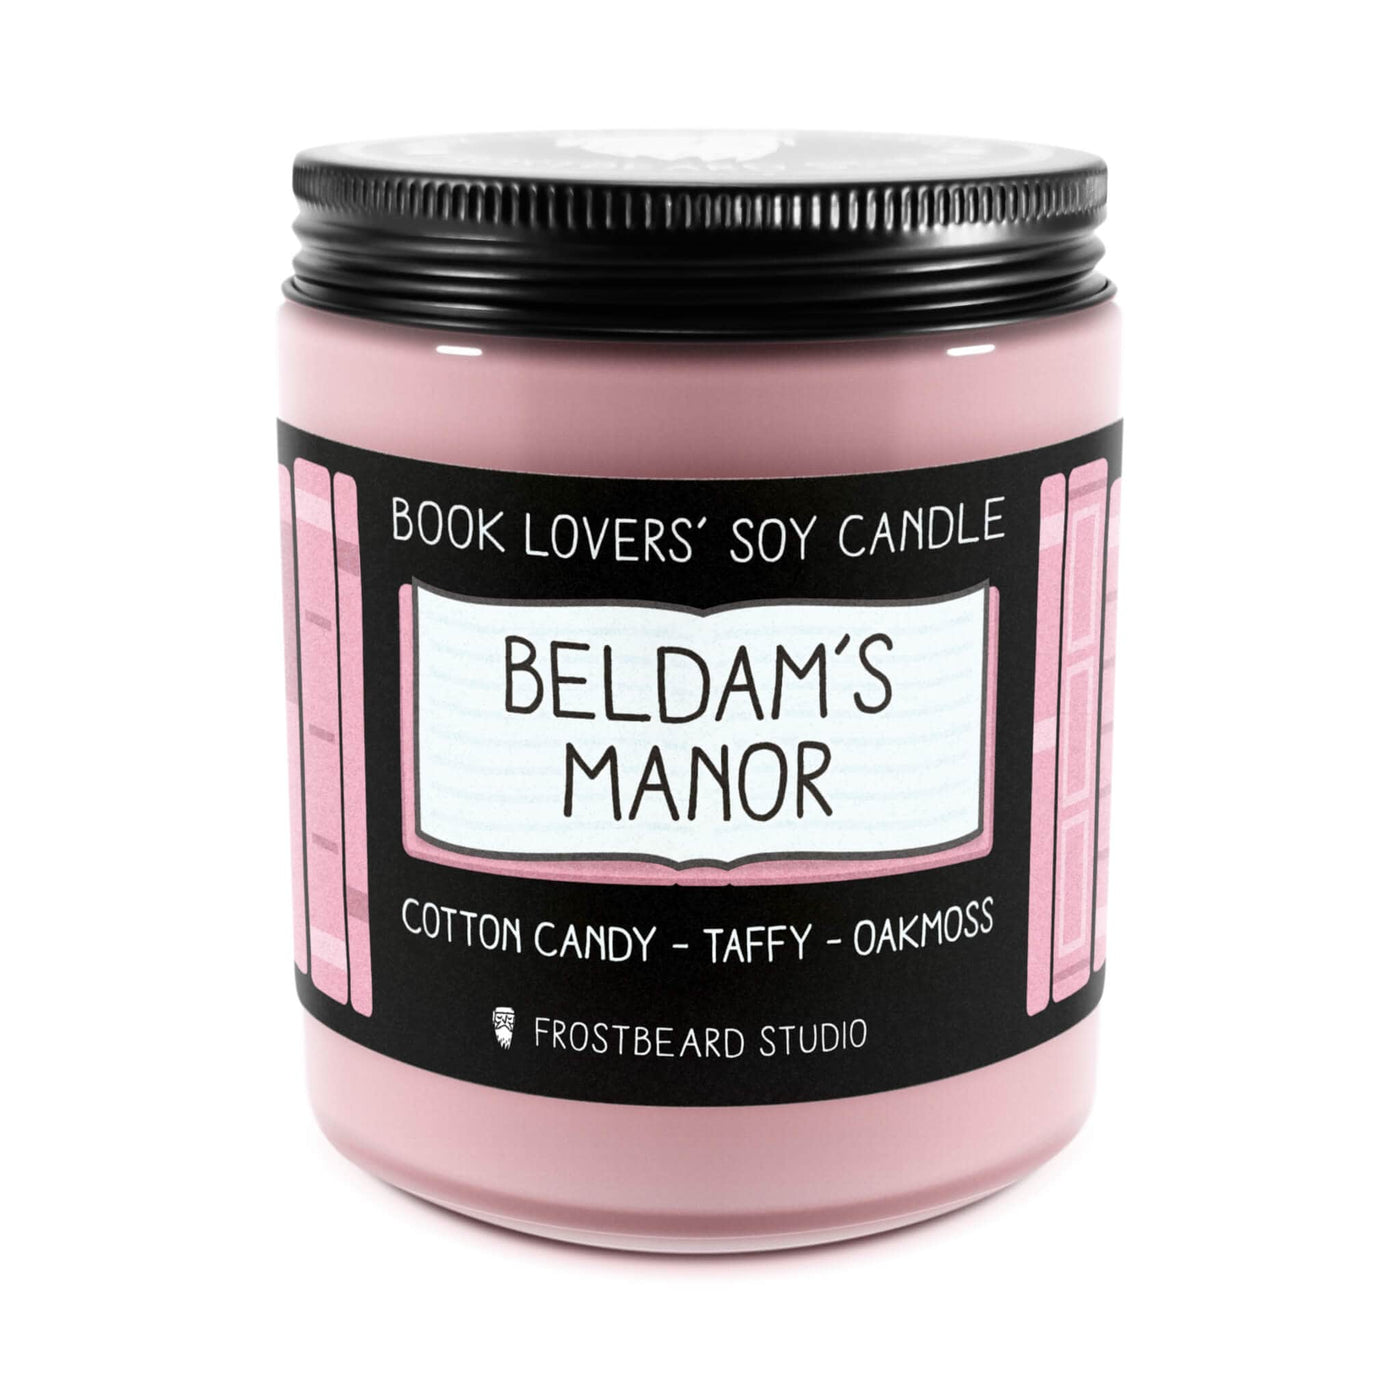 Beldam's Manor - 8 oz Jar - Book Lovers' Soy Candle - Frostbeard Studio